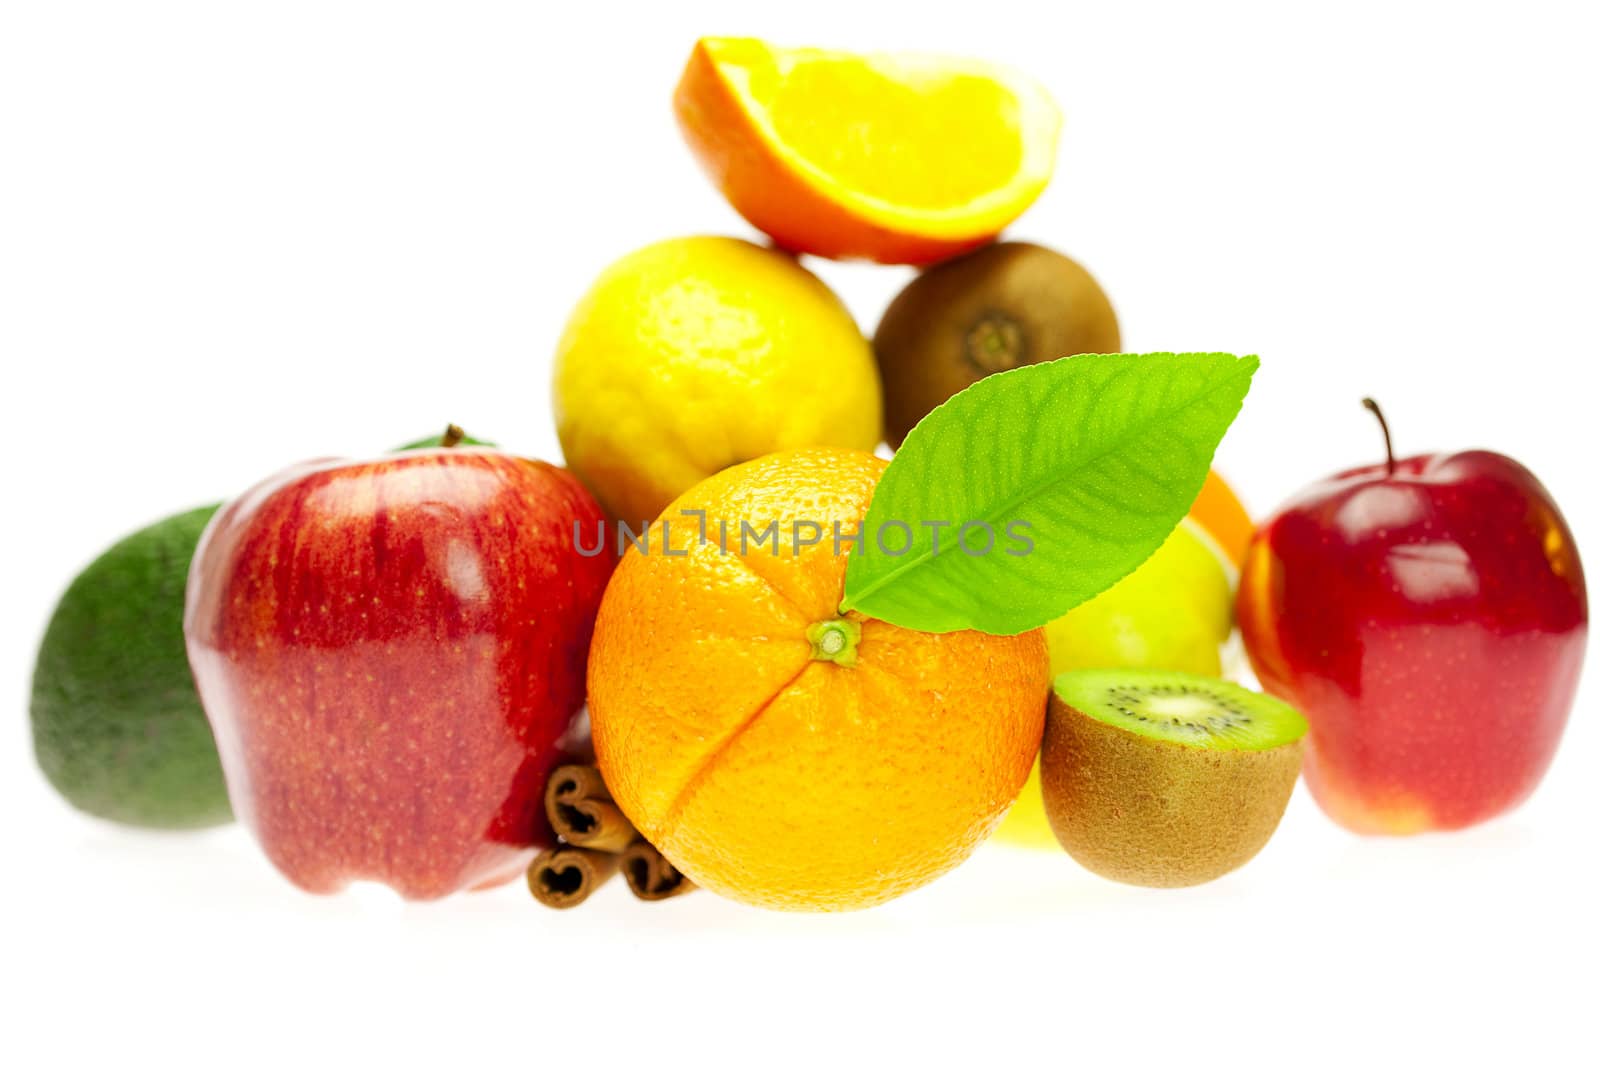 kiwi, avocado, apples, orange, lemon, and cinnamon, isolated on white